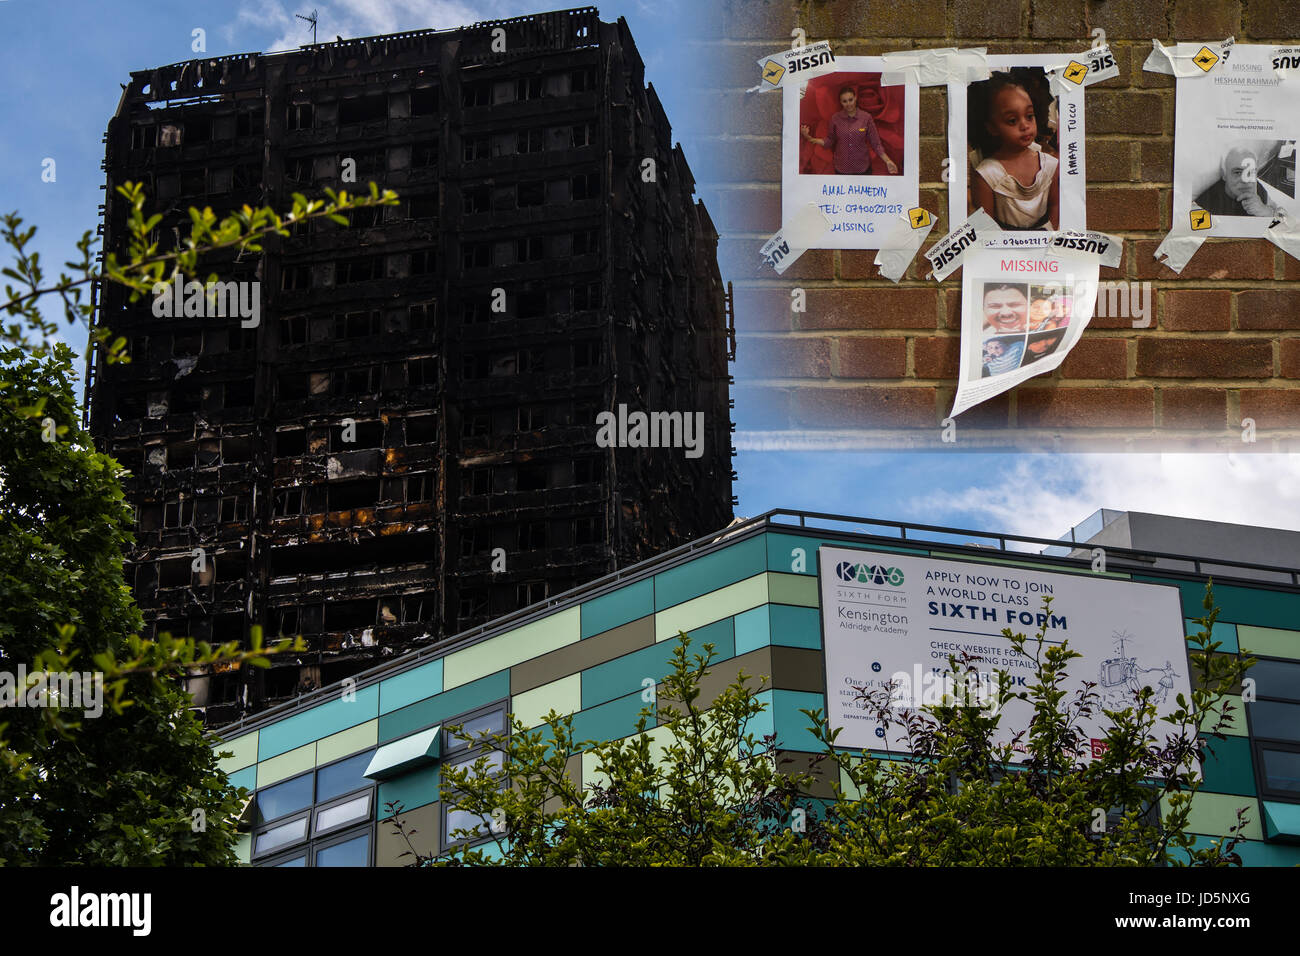 LONDON, UK - 16. Juni 2017 Grenfell Turm nach Brand mit Kensington Aldridge Academy und vermissten Personen Stockfoto